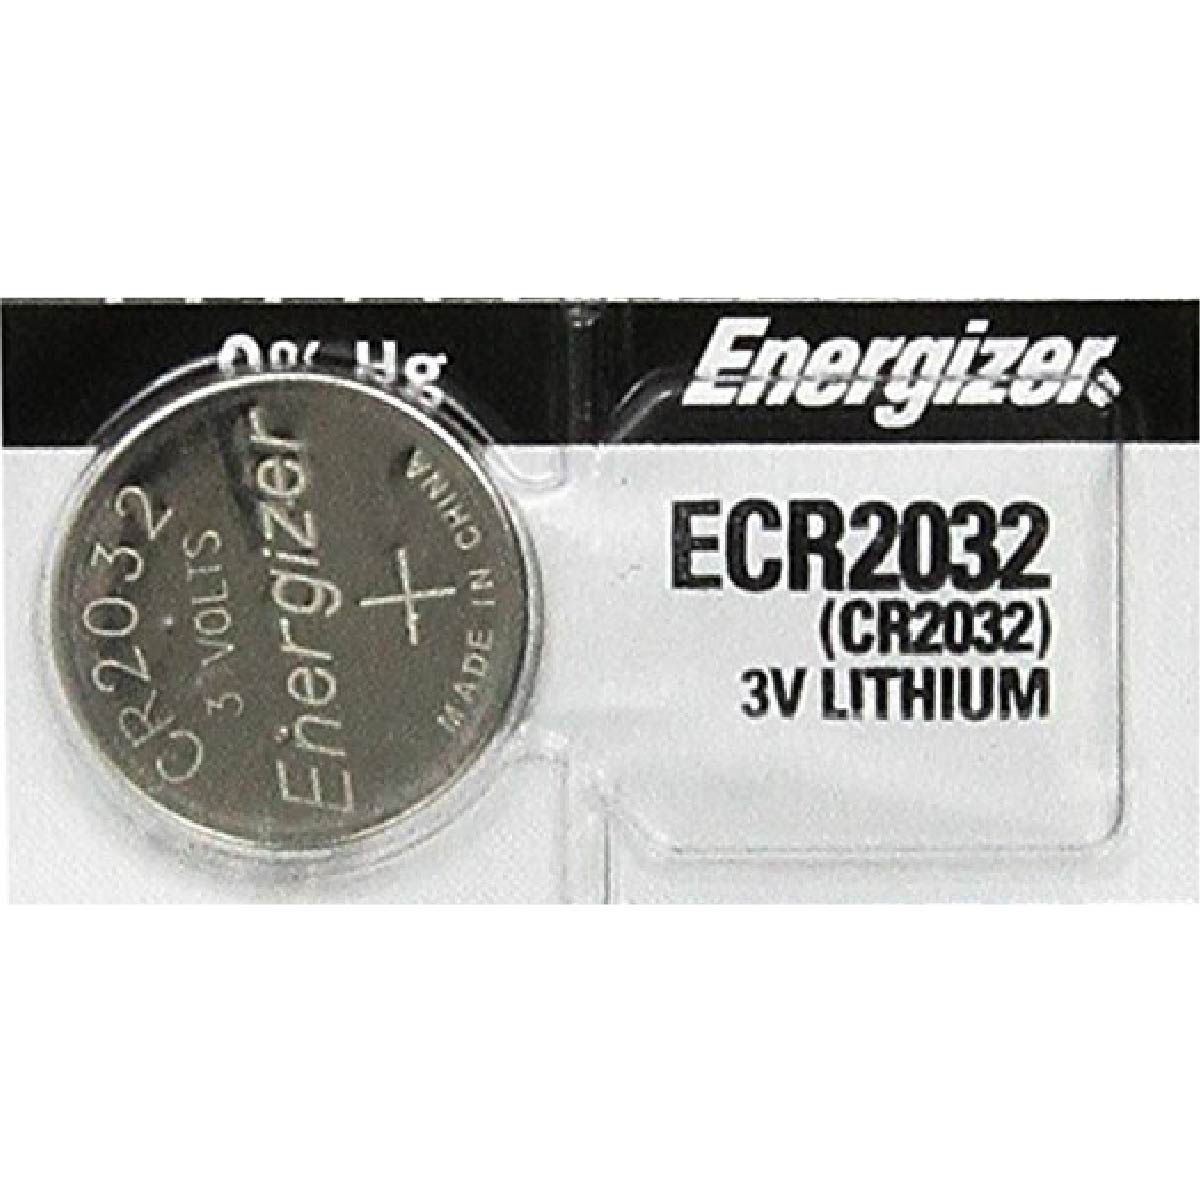 Energizer ECR2032 Battery 3V Lithium Coin Cell (1PC)